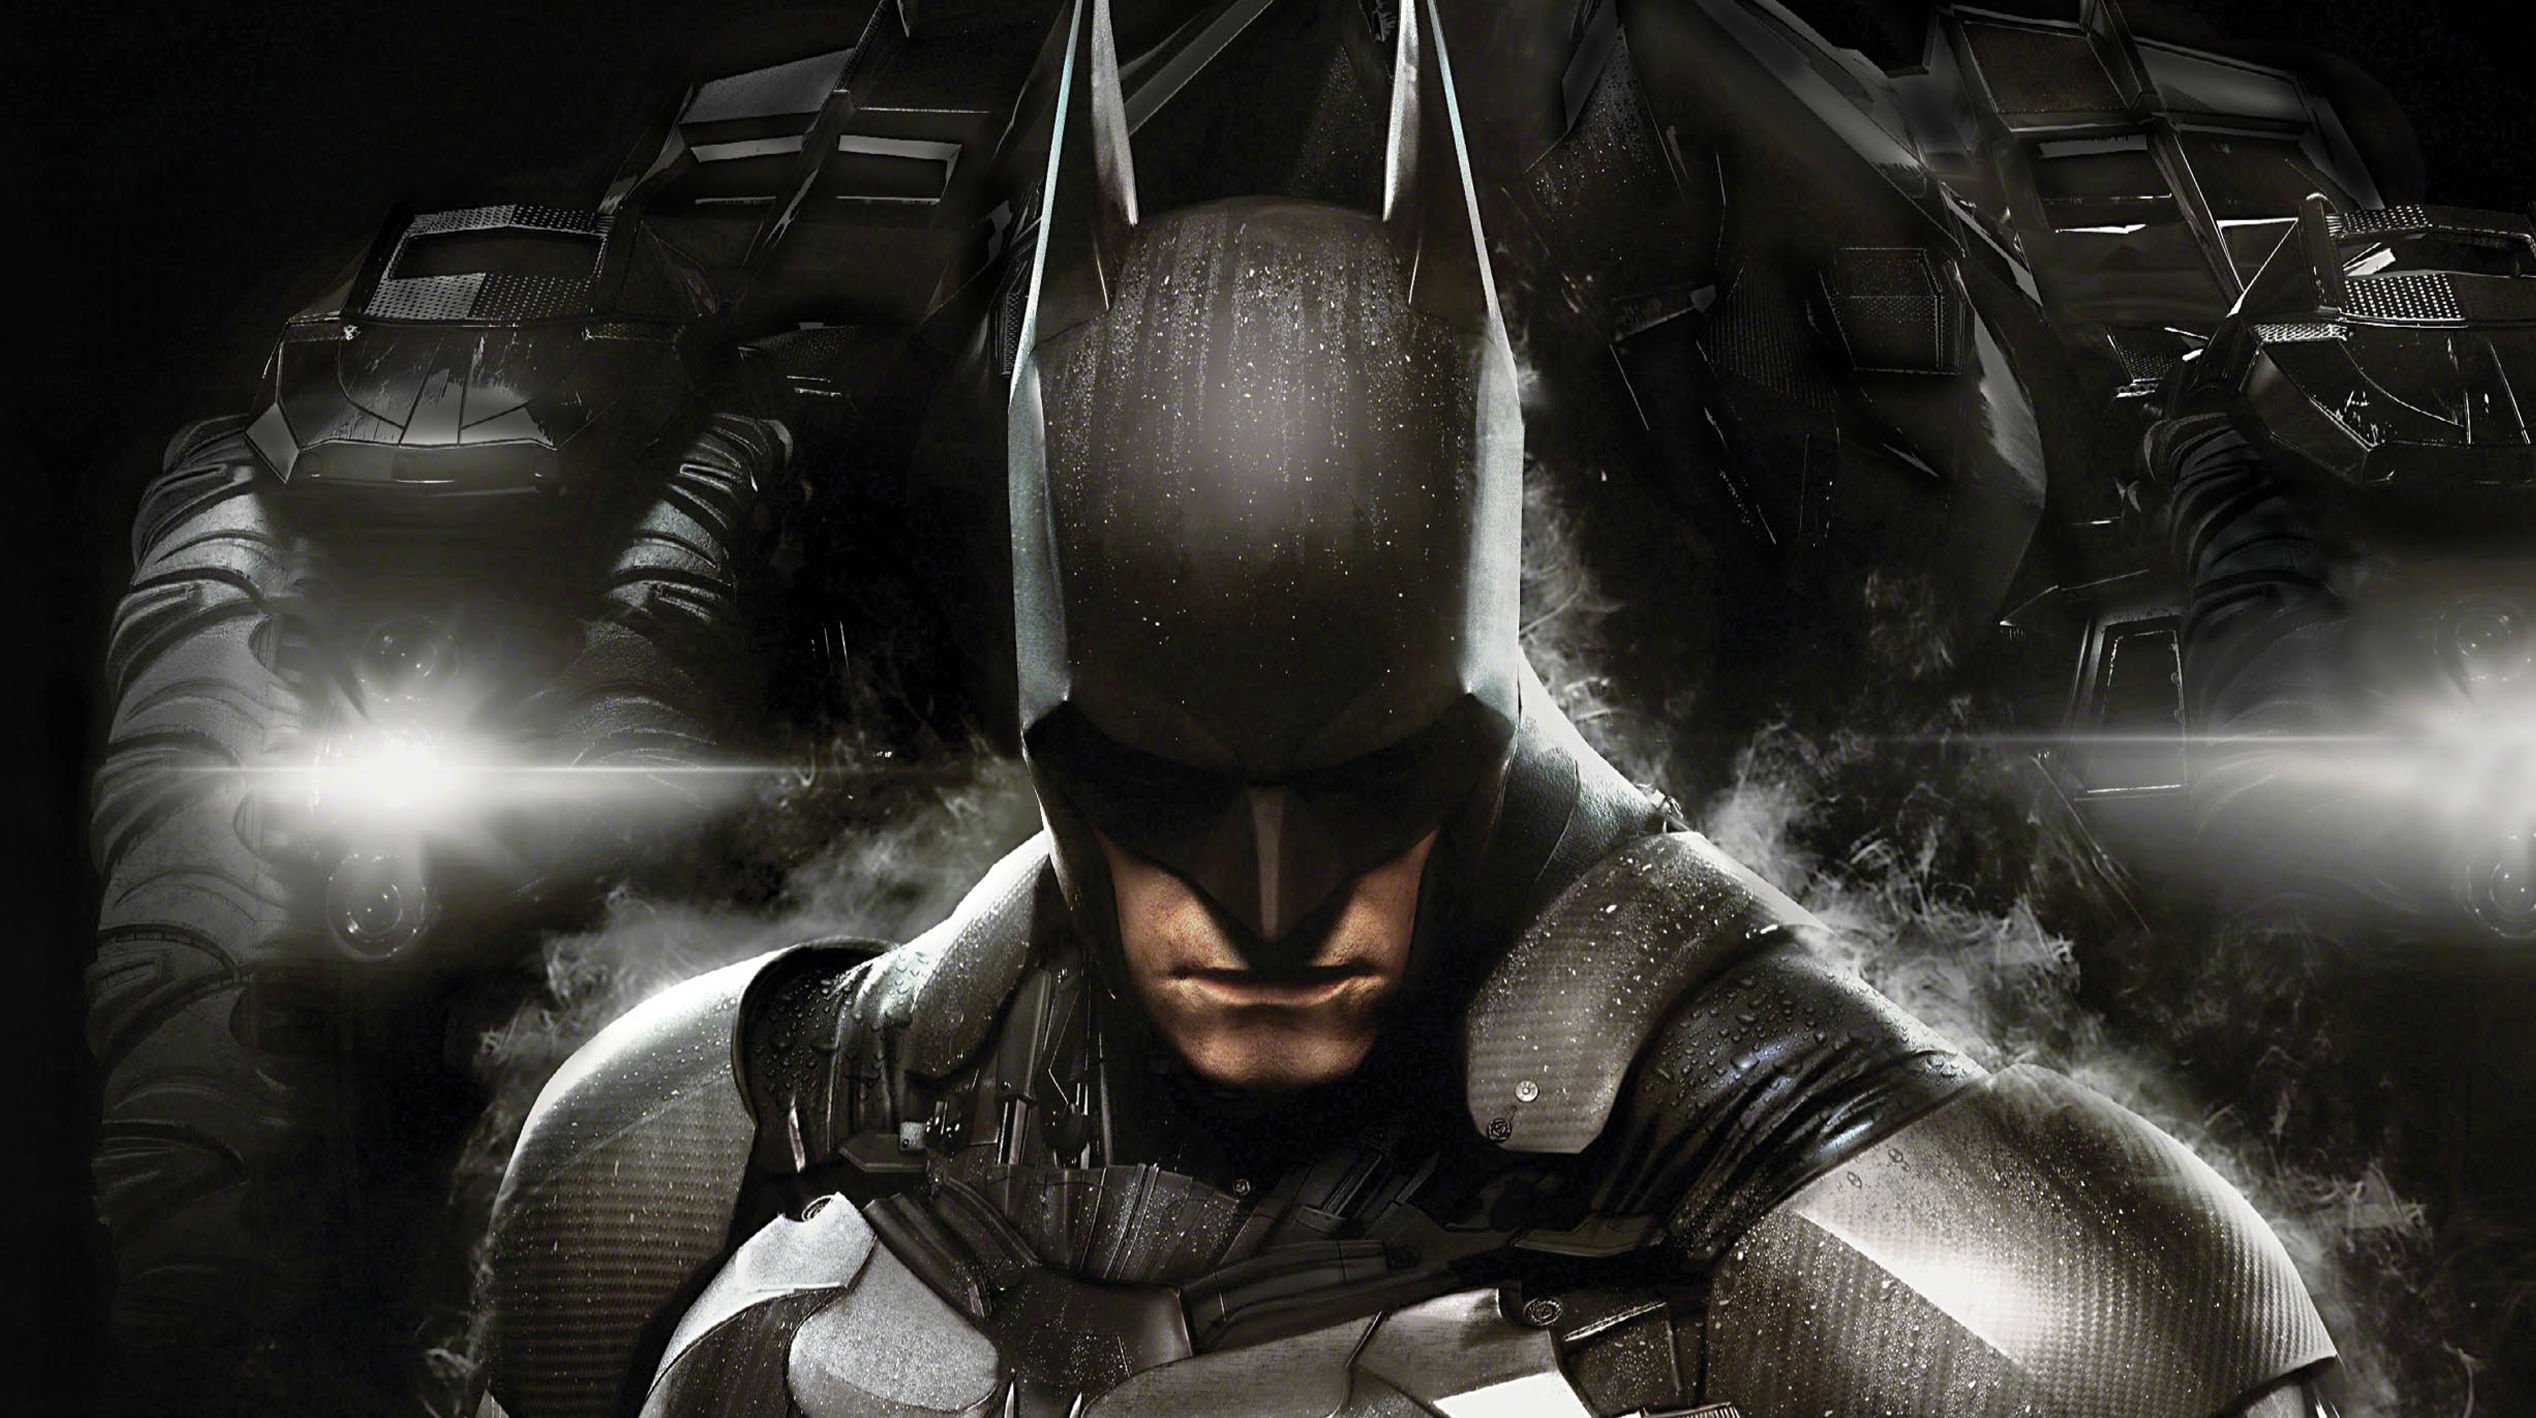 Batman Arkham Origins para PC - PS3 - Xbox 360 - Wii U - Android - iOS |  3DJuegos